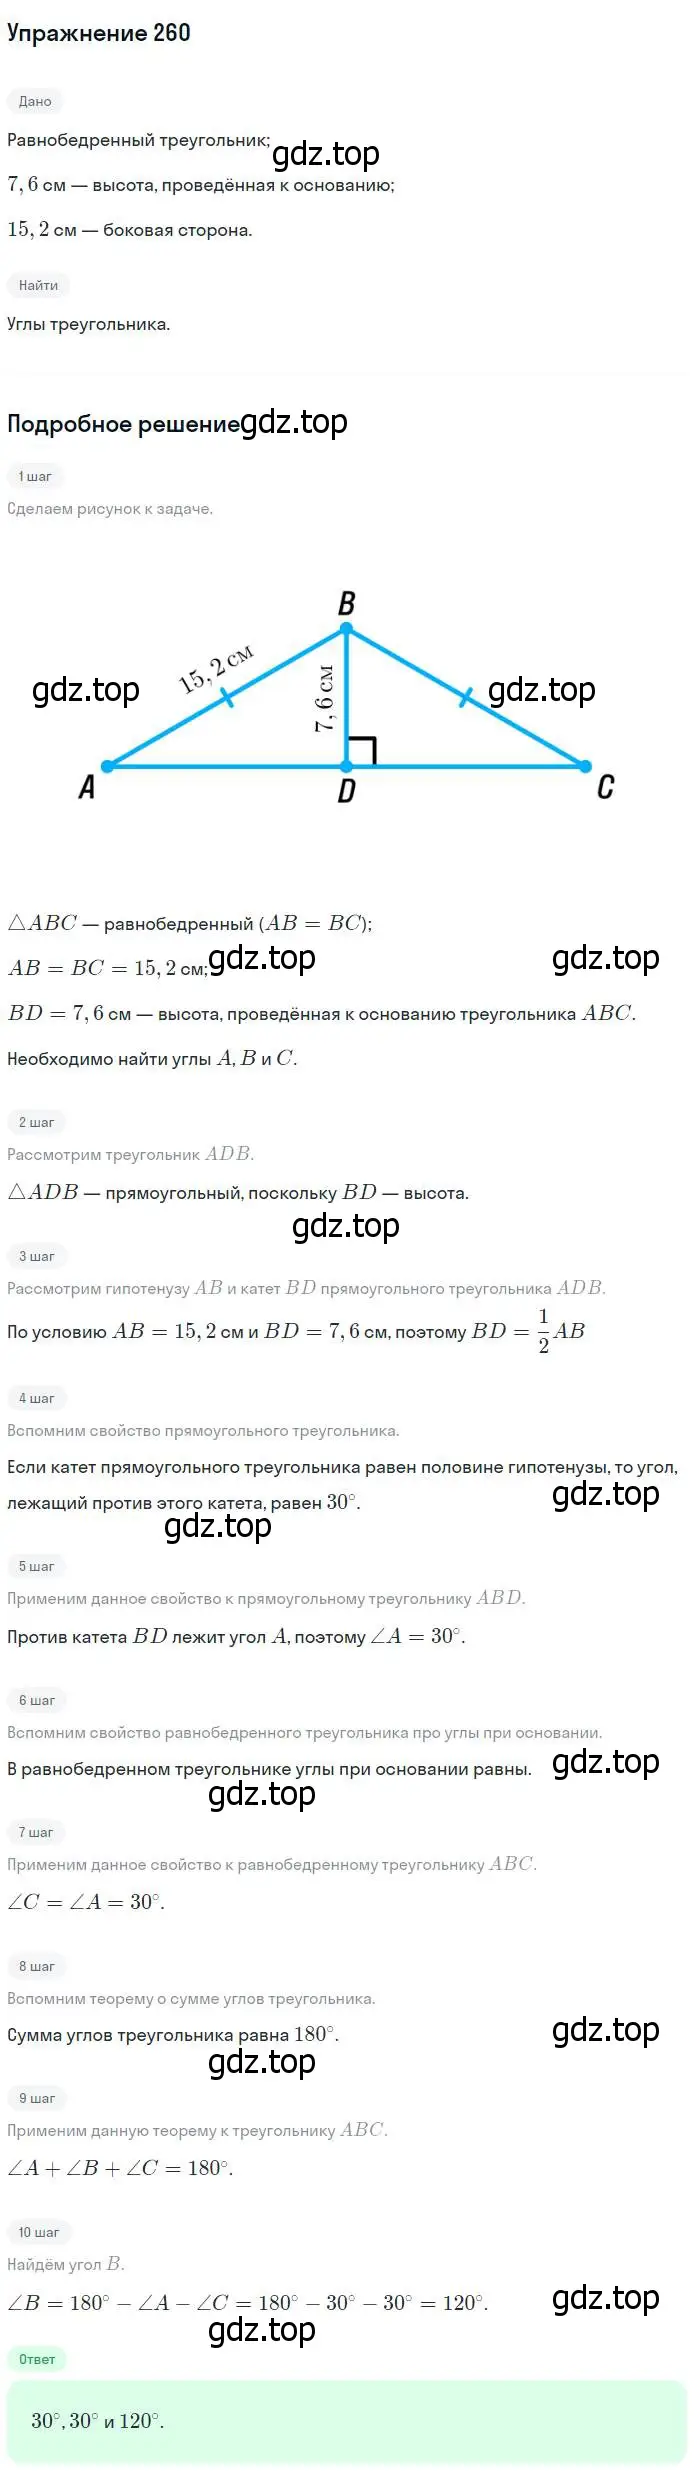 Решение номер 260 (страница 80) гдз по геометрии 7-9 класс Атанасян, Бутузов, учебник